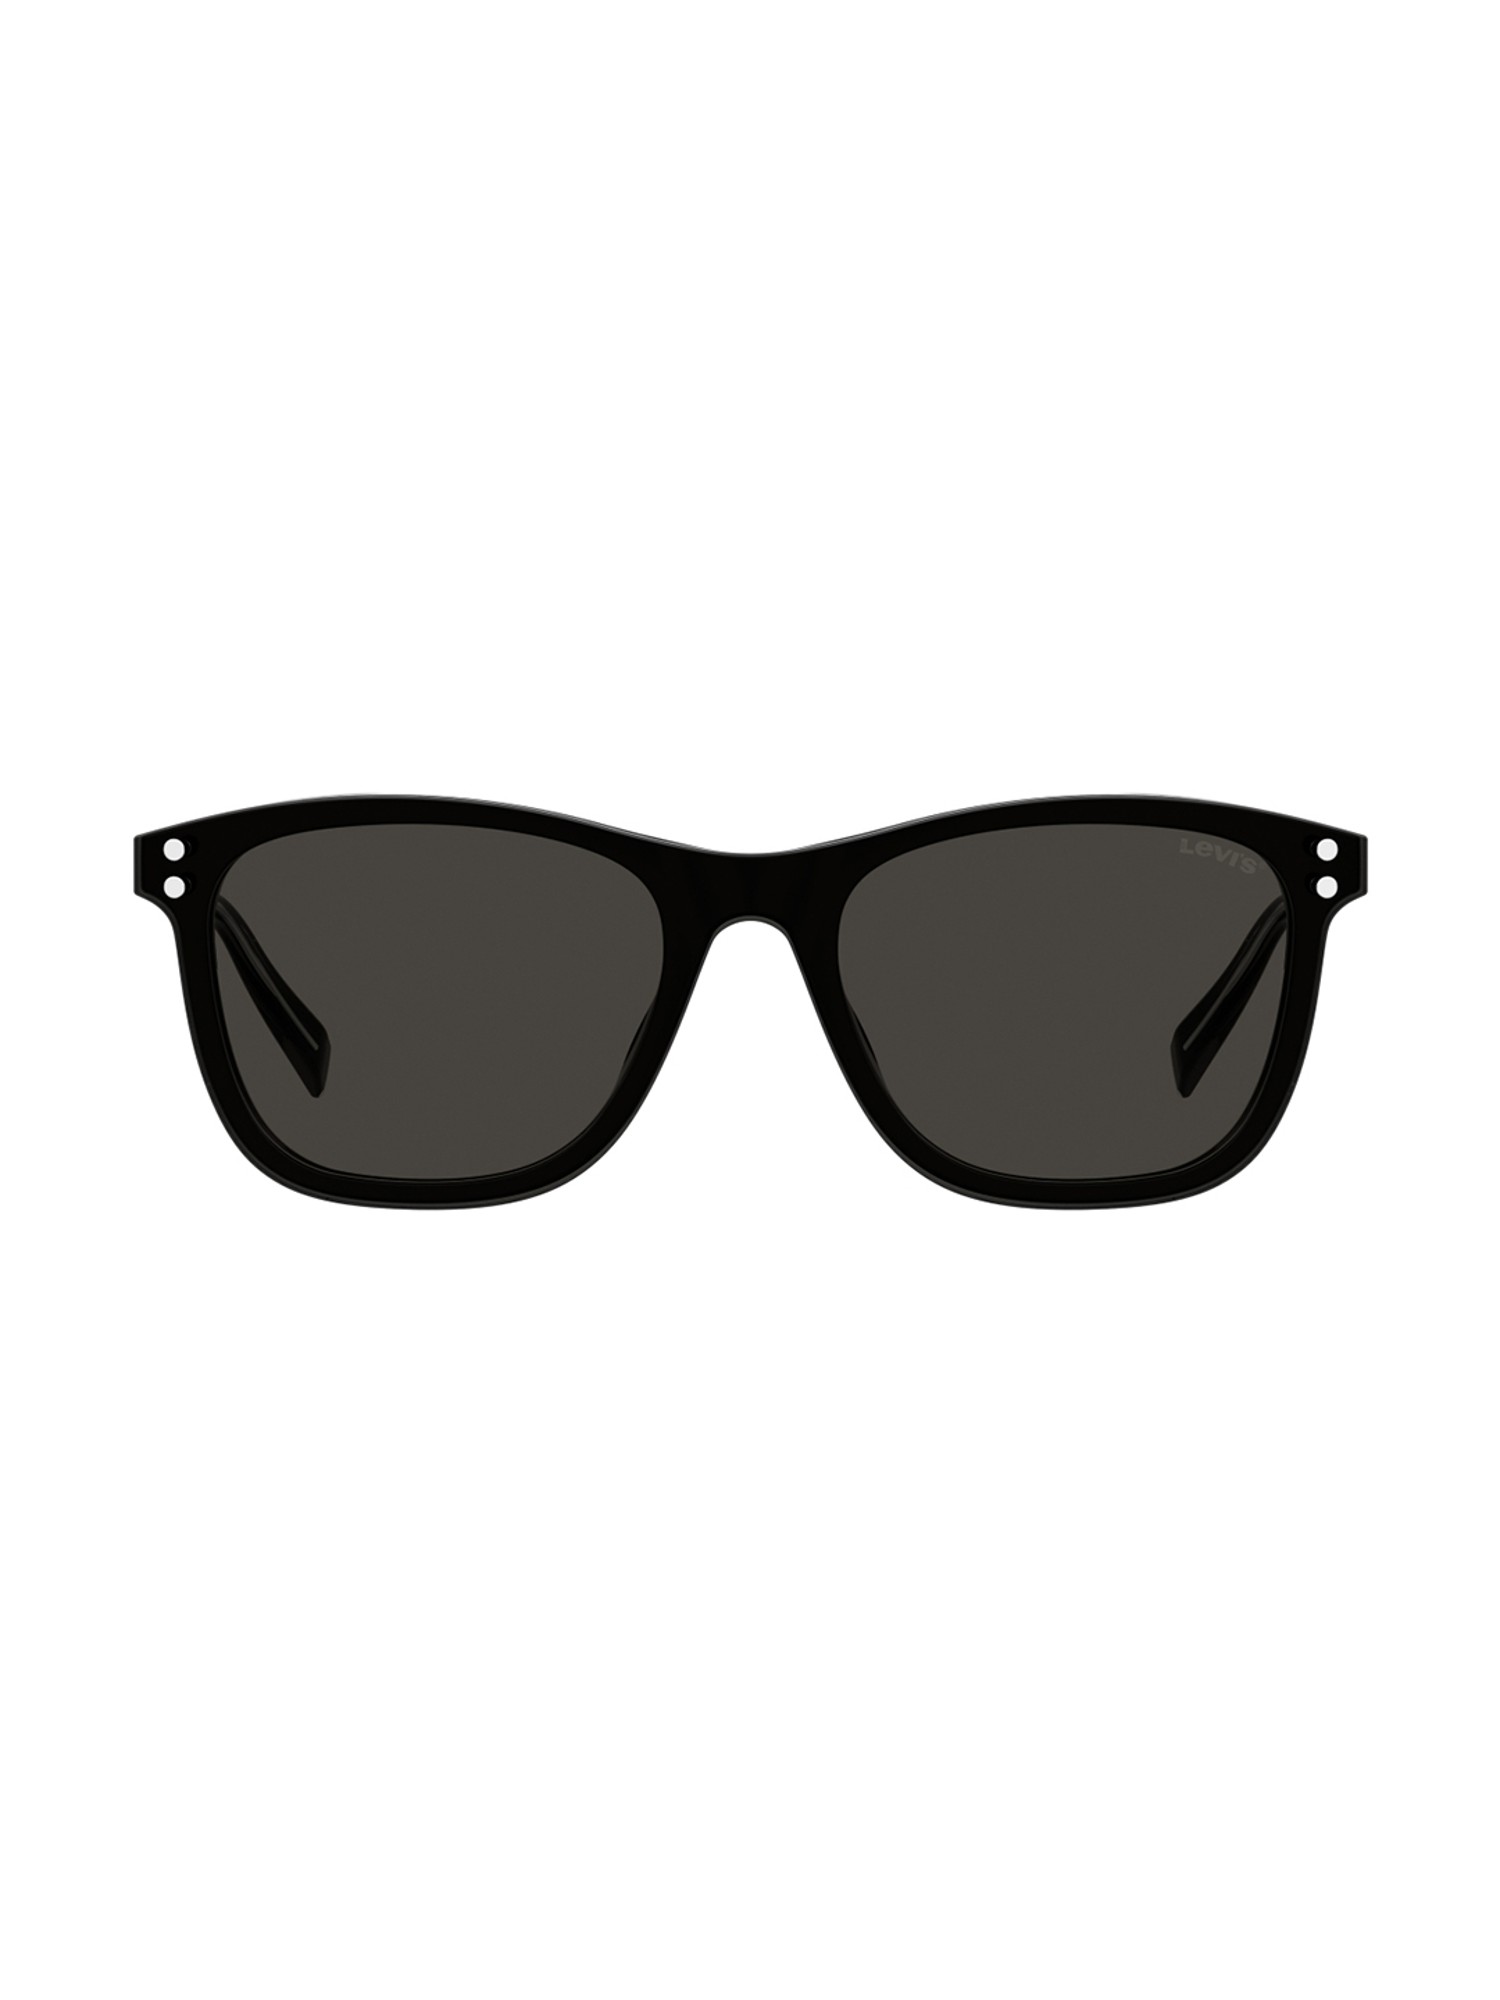  Levi's Men's LV 5013/CS Rectangular Sunglasses, Black, 53mm,  18mm : Clothing, Shoes & Jewelry